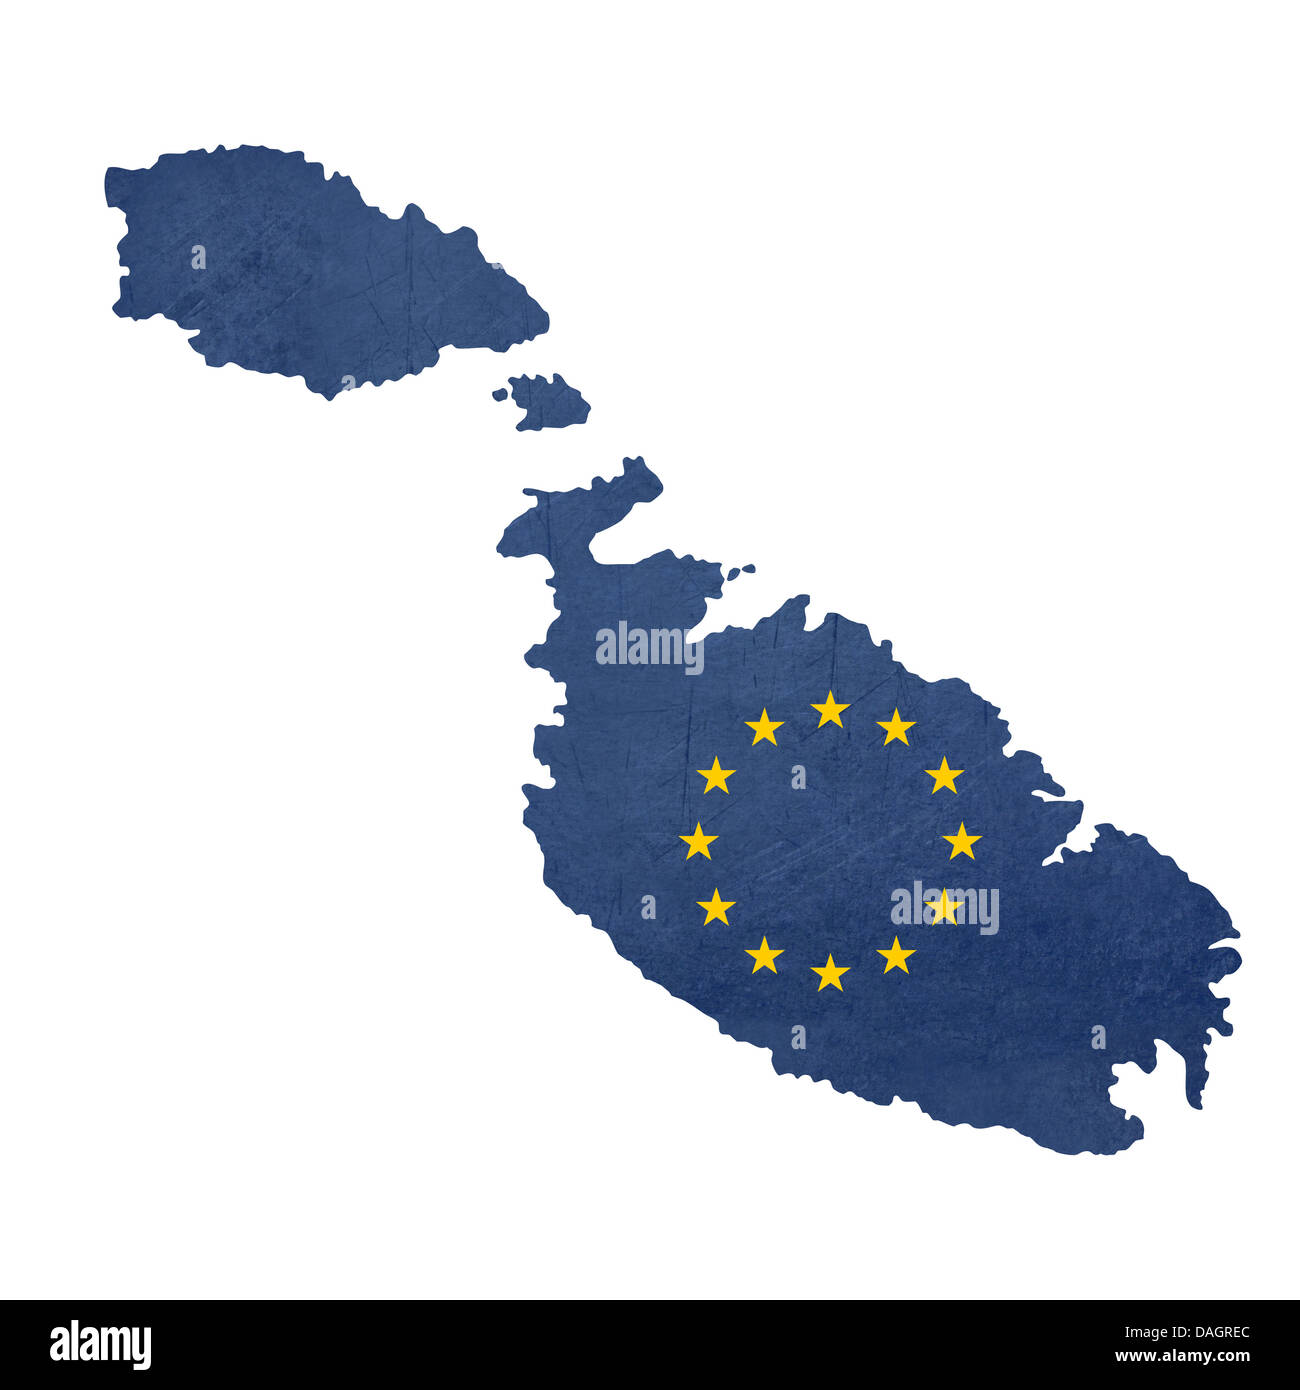 European flag map of Malta isolated on white background. Stock Photo